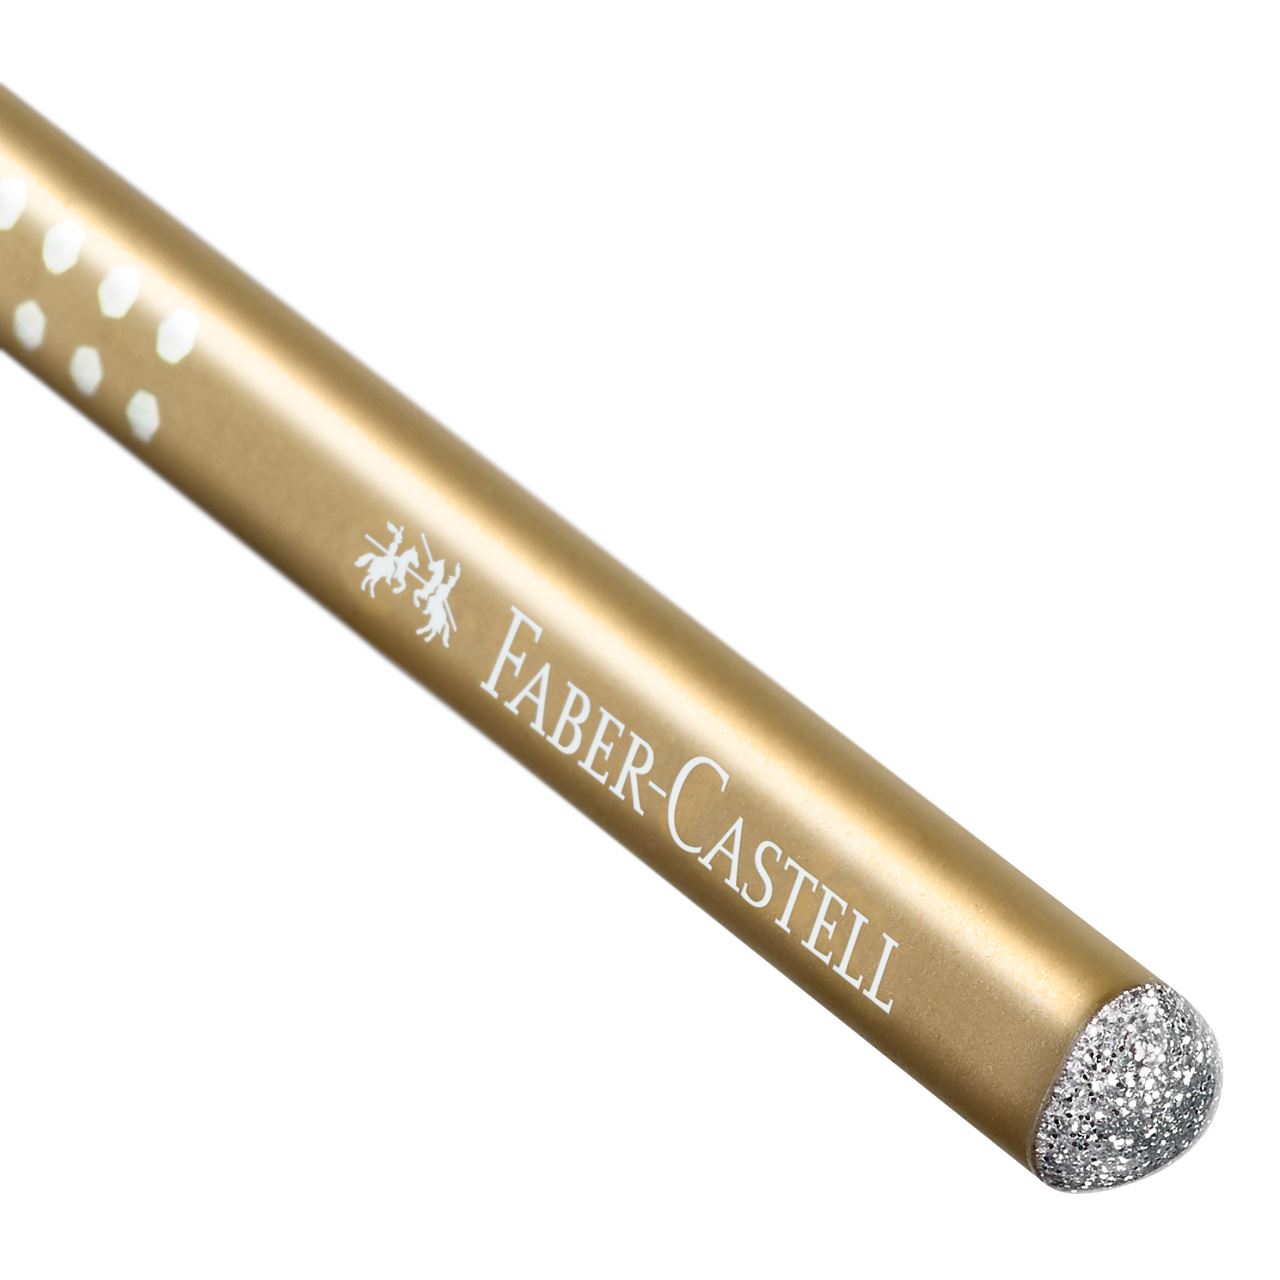 Faber-Castell - Sparkle graphite pencil, pearl gold